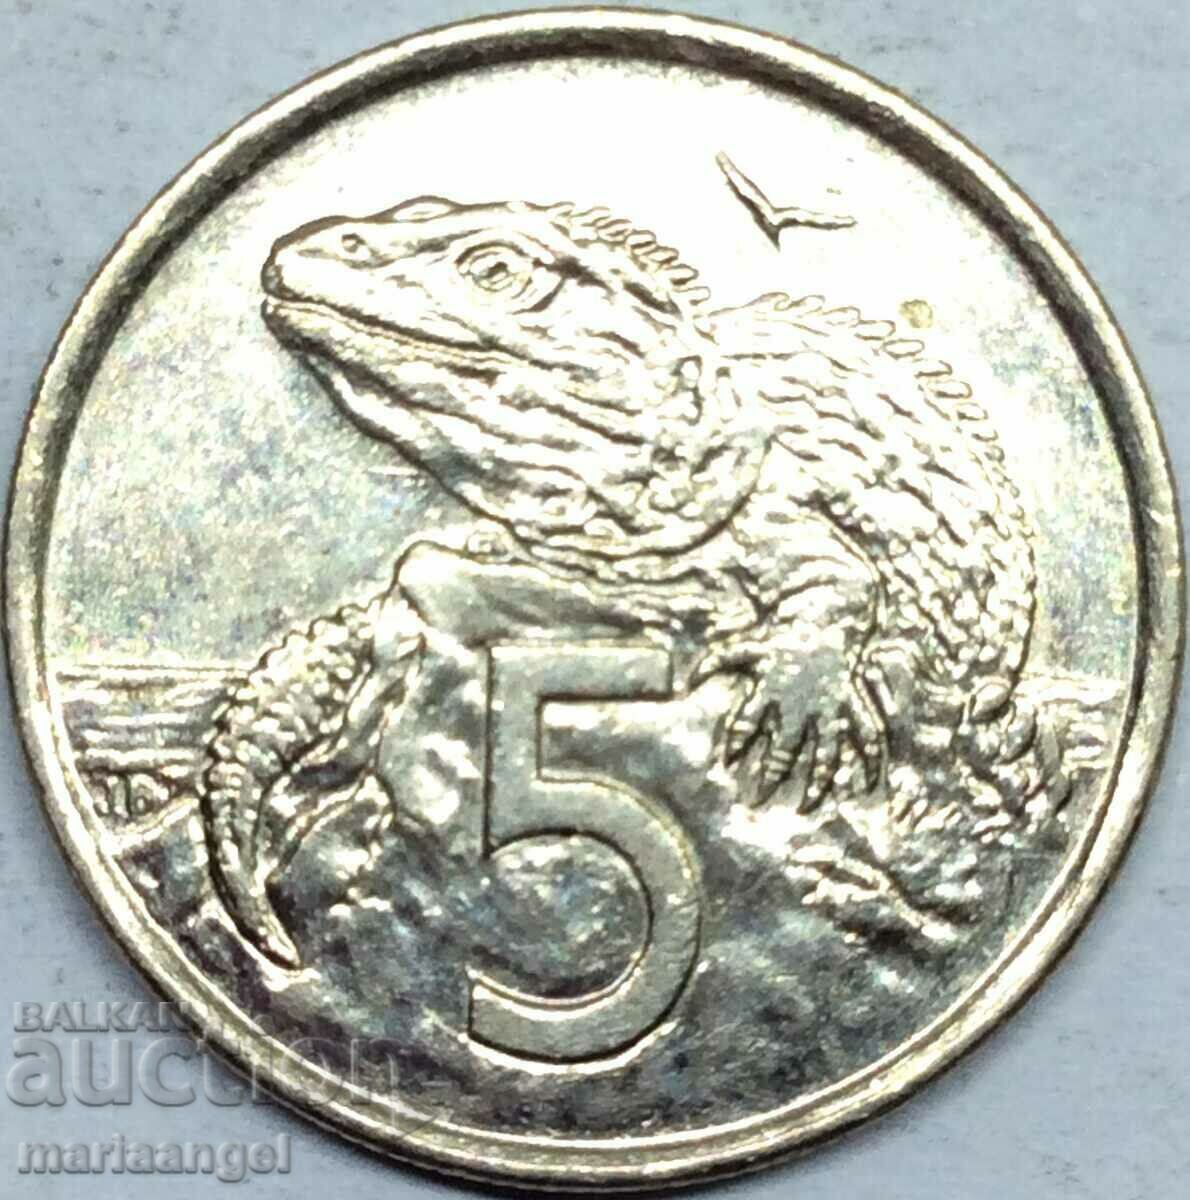 New Zealand 5 cents 2002 Elizabeth II steel